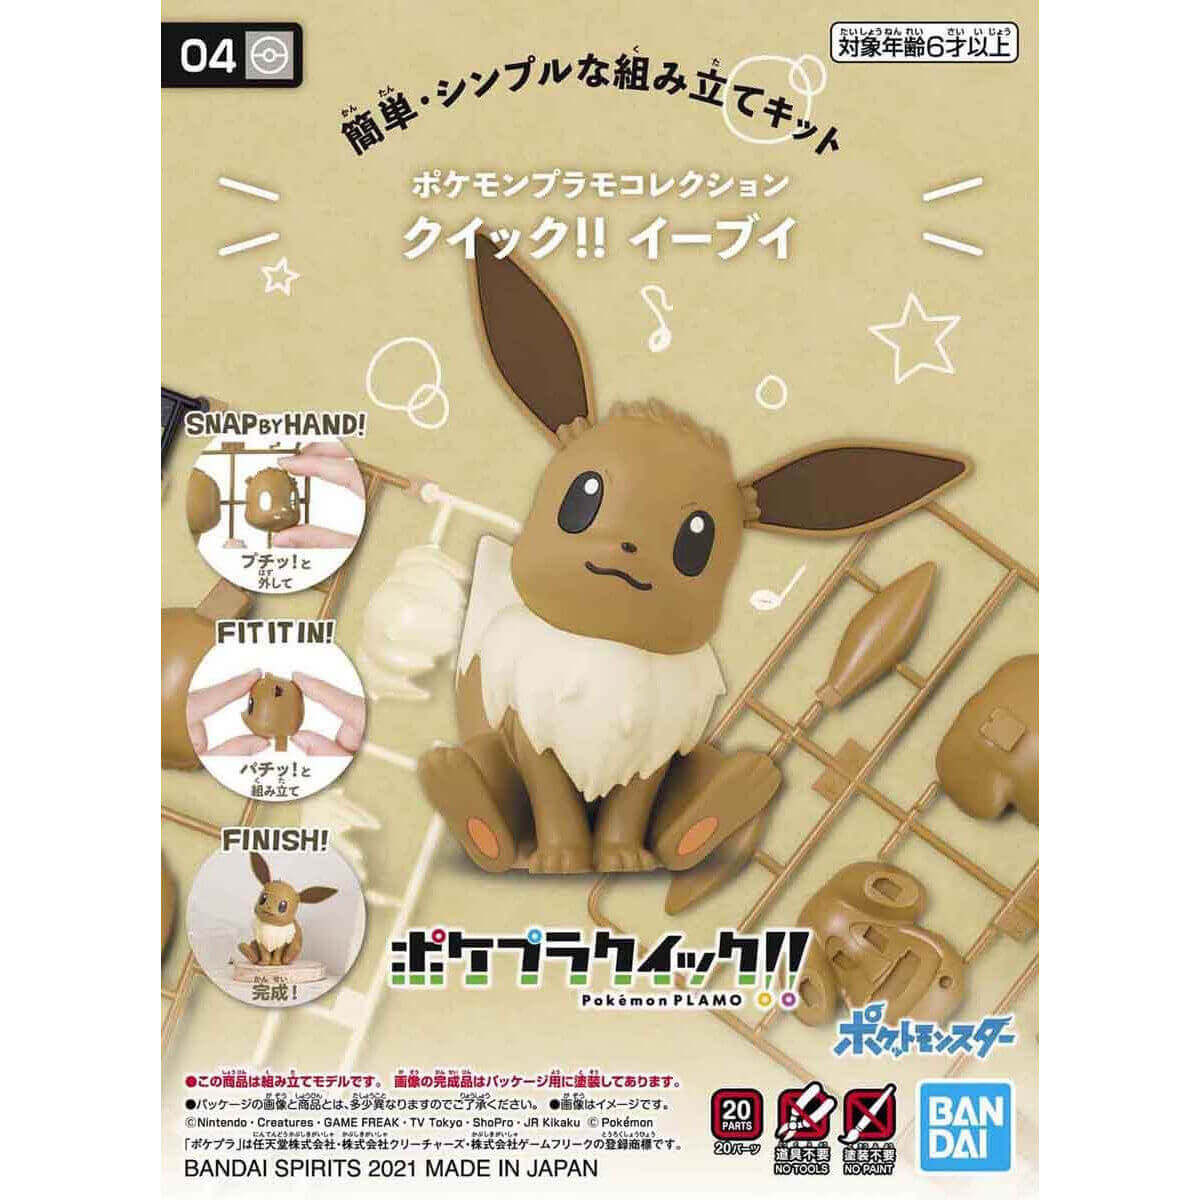 04 Eevee Model kit - Pokémon Plamo Quick! Collection - konbinistop